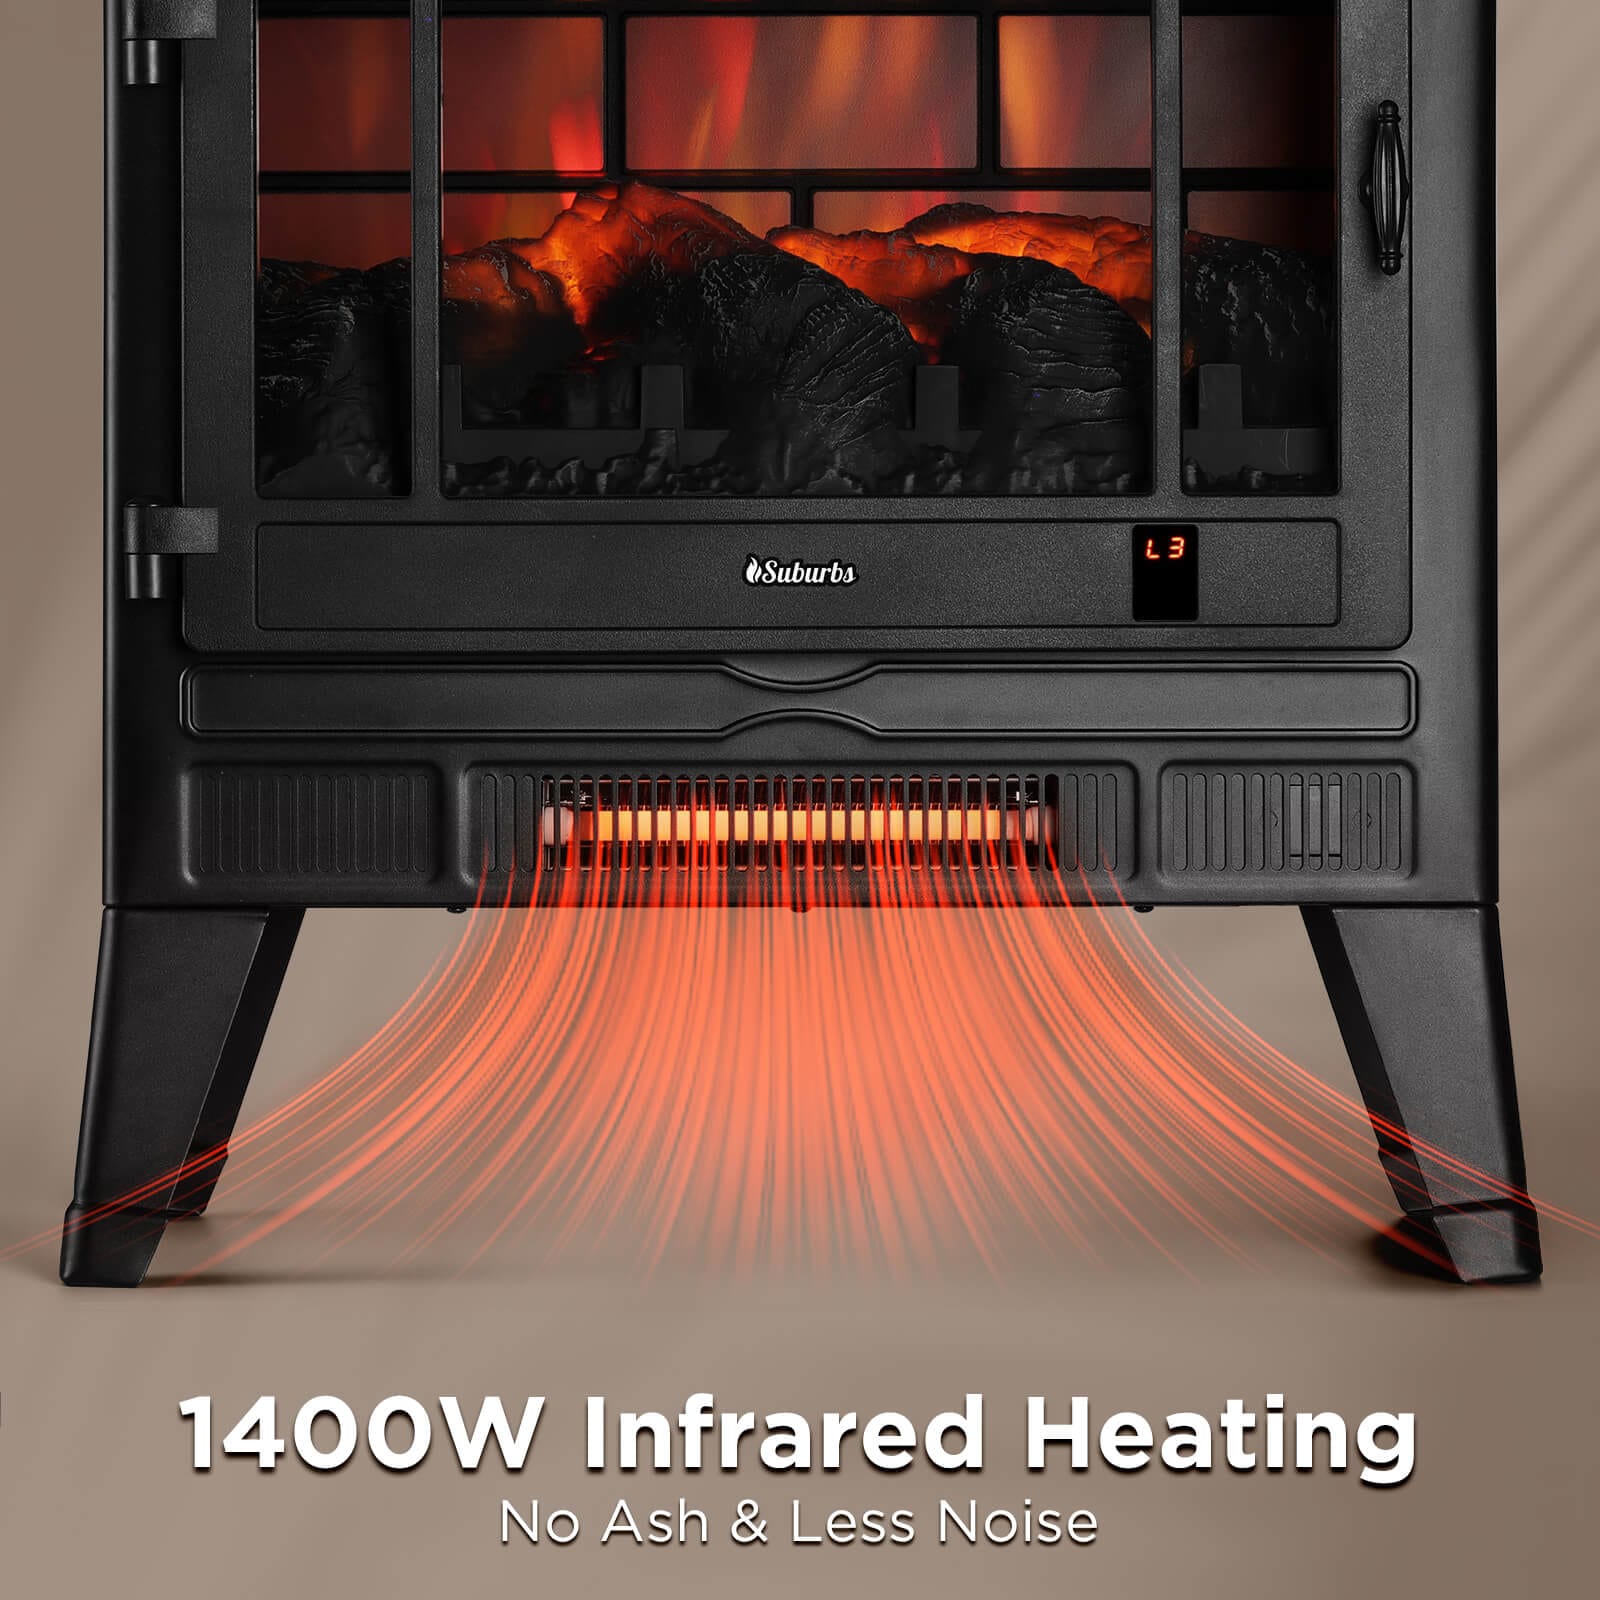 TURBRO Suburbs TS25 Smart Electric Fireplace Stove Heater, WiFi Enabled Electric Fireplace Stove